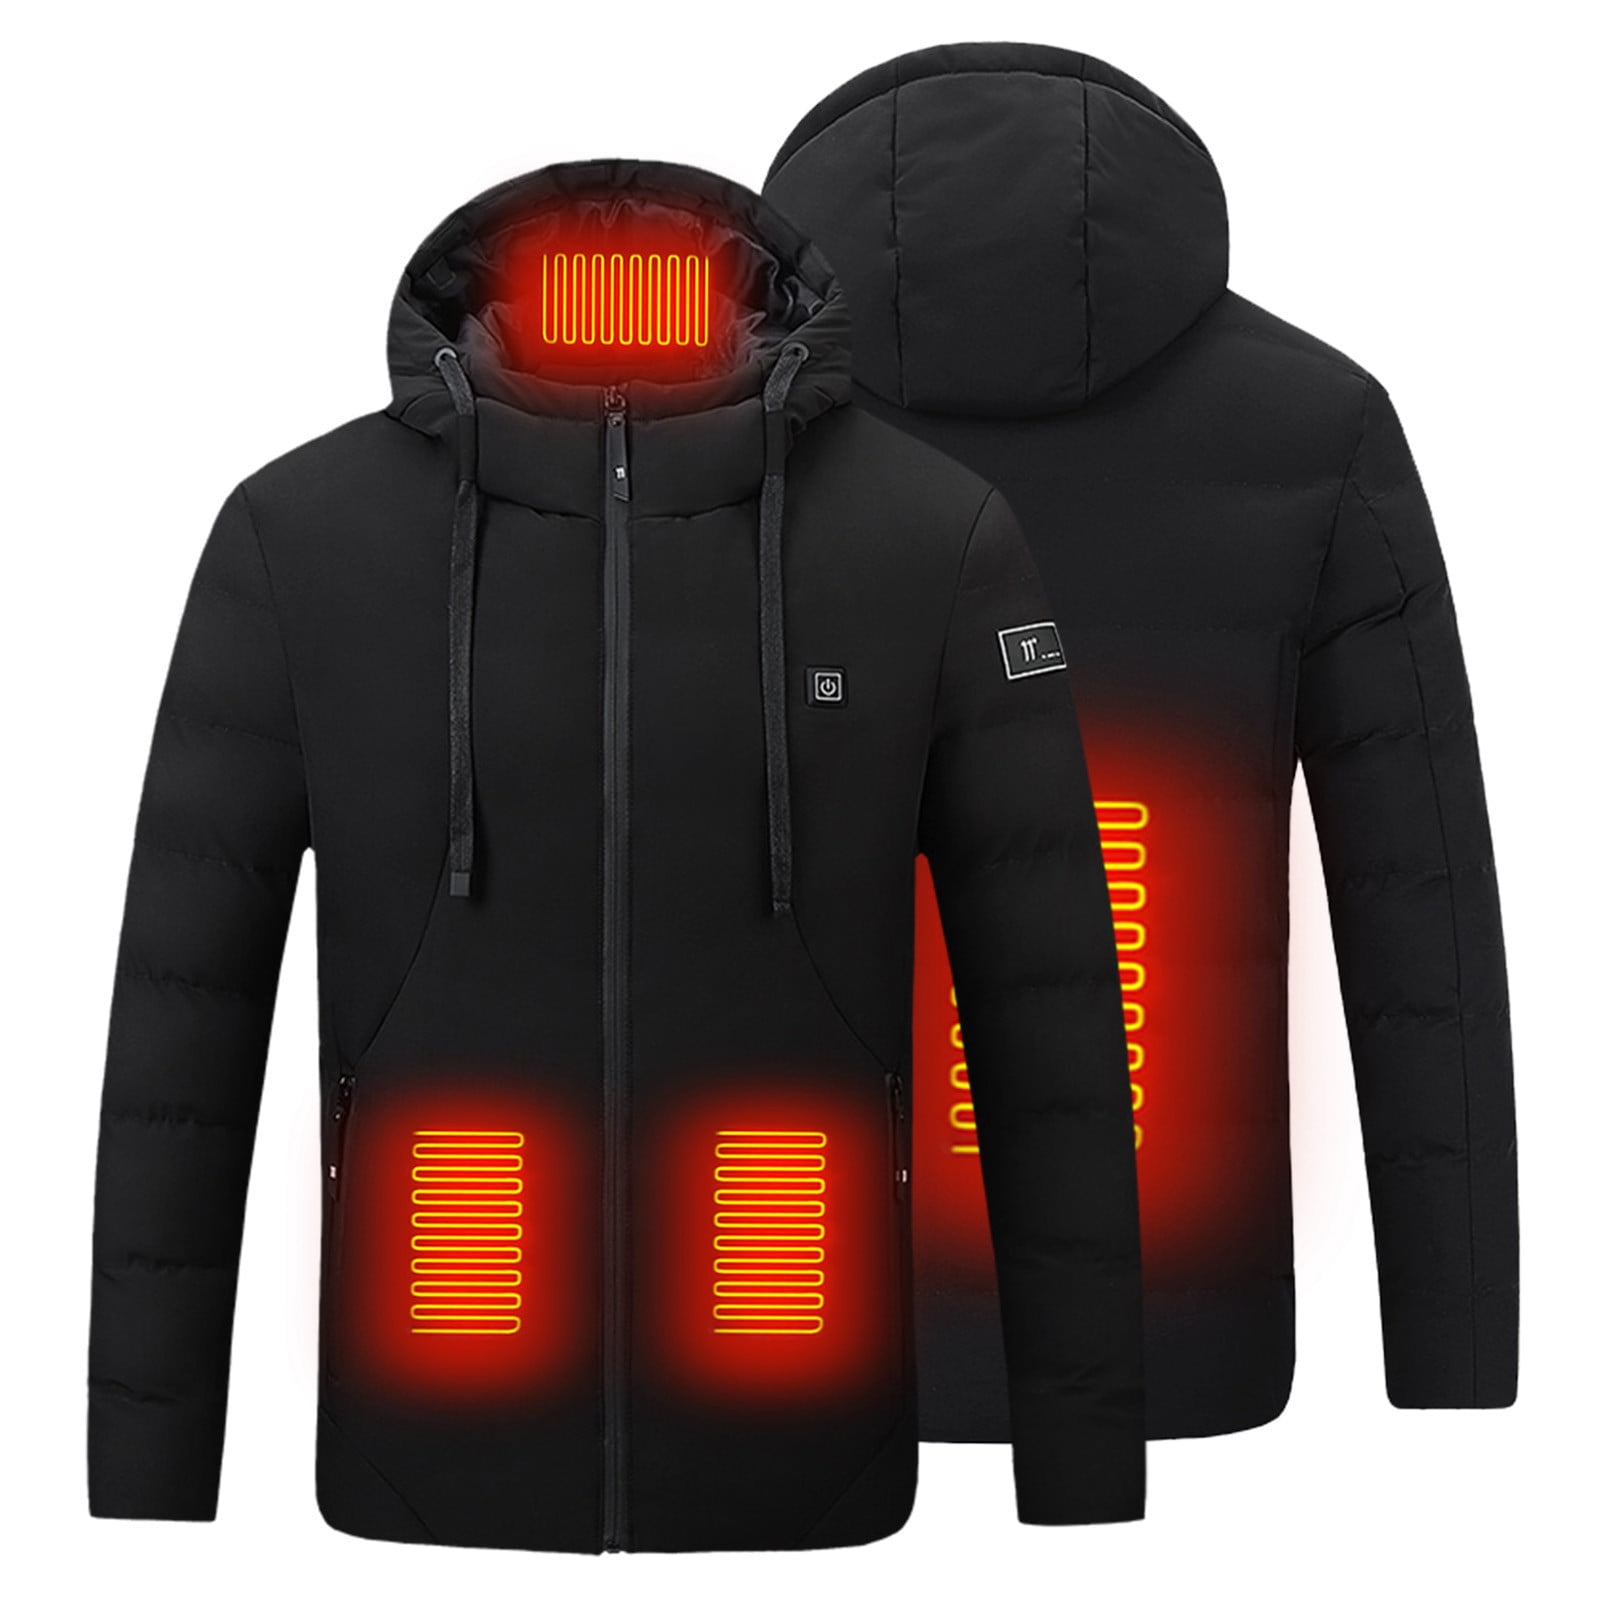 Heated Jacket, Unisex Outdoor Warm Clothing Heated Hoodie For Riding Skiing  Fishing Charging Zip Heating Coat 